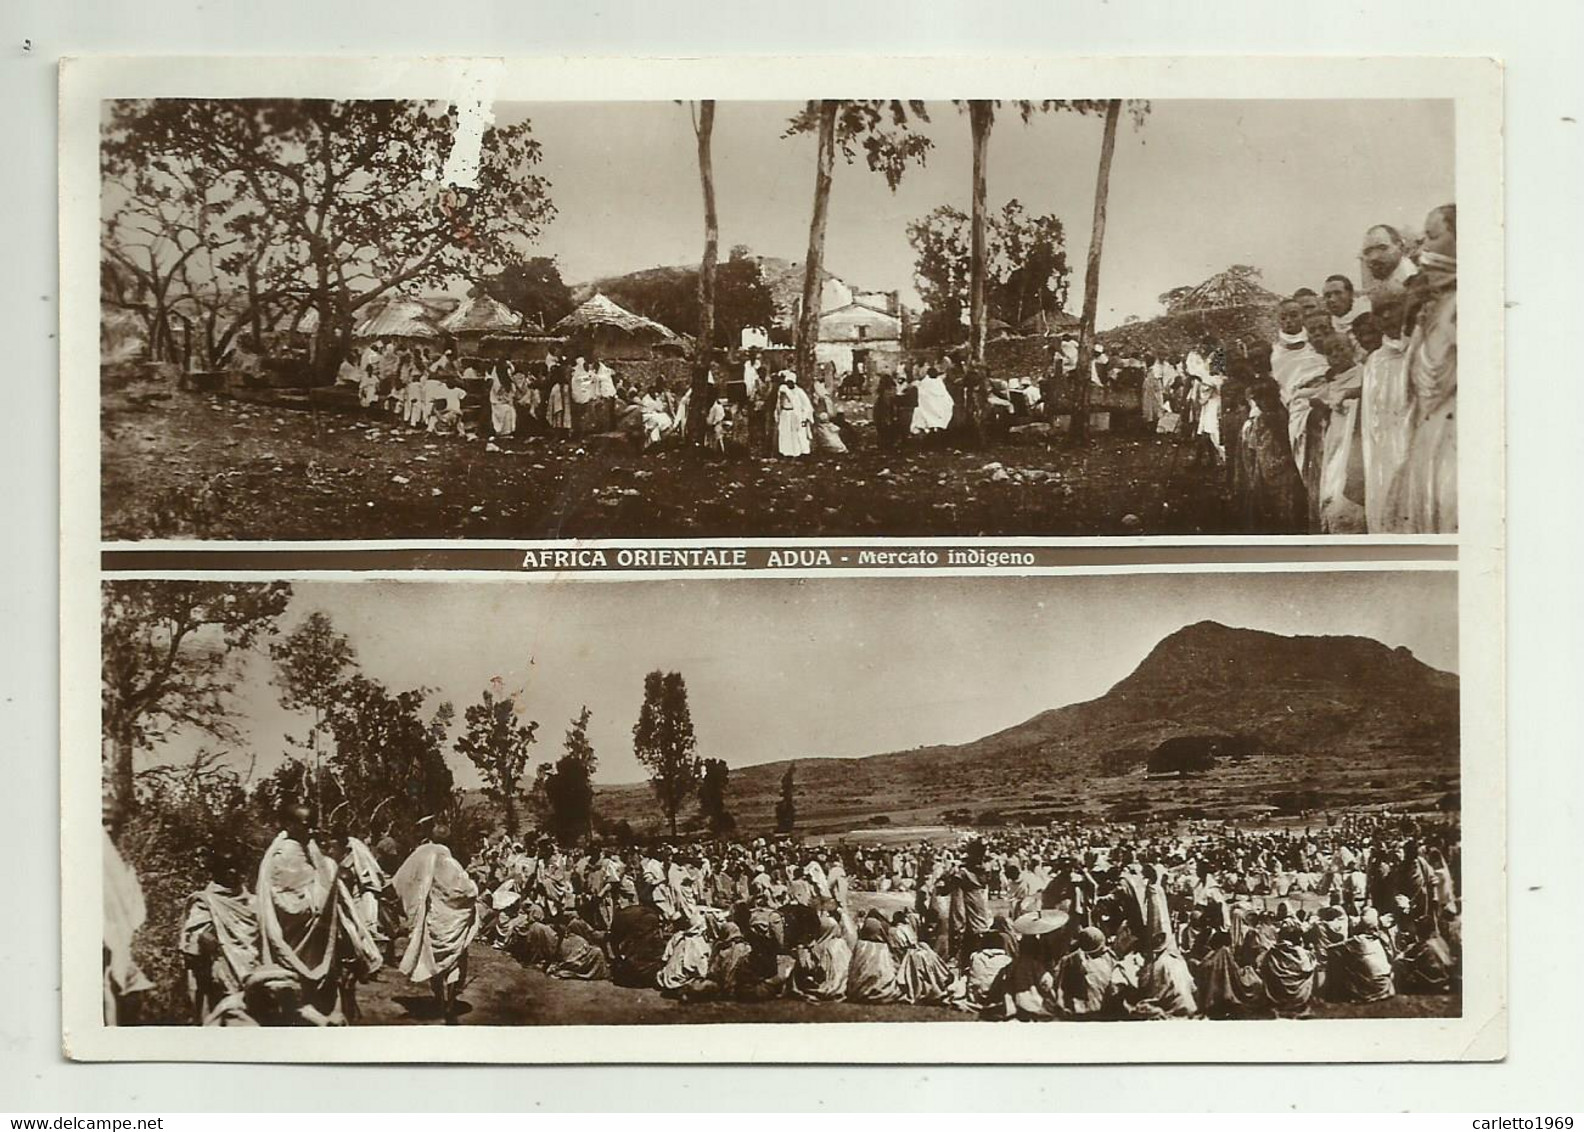 AFRICA ORIENTALE ADUA - MERCATO INDIGENO 1938 - NV FG ( SEGNO PARTE SX ) - Ethiopie